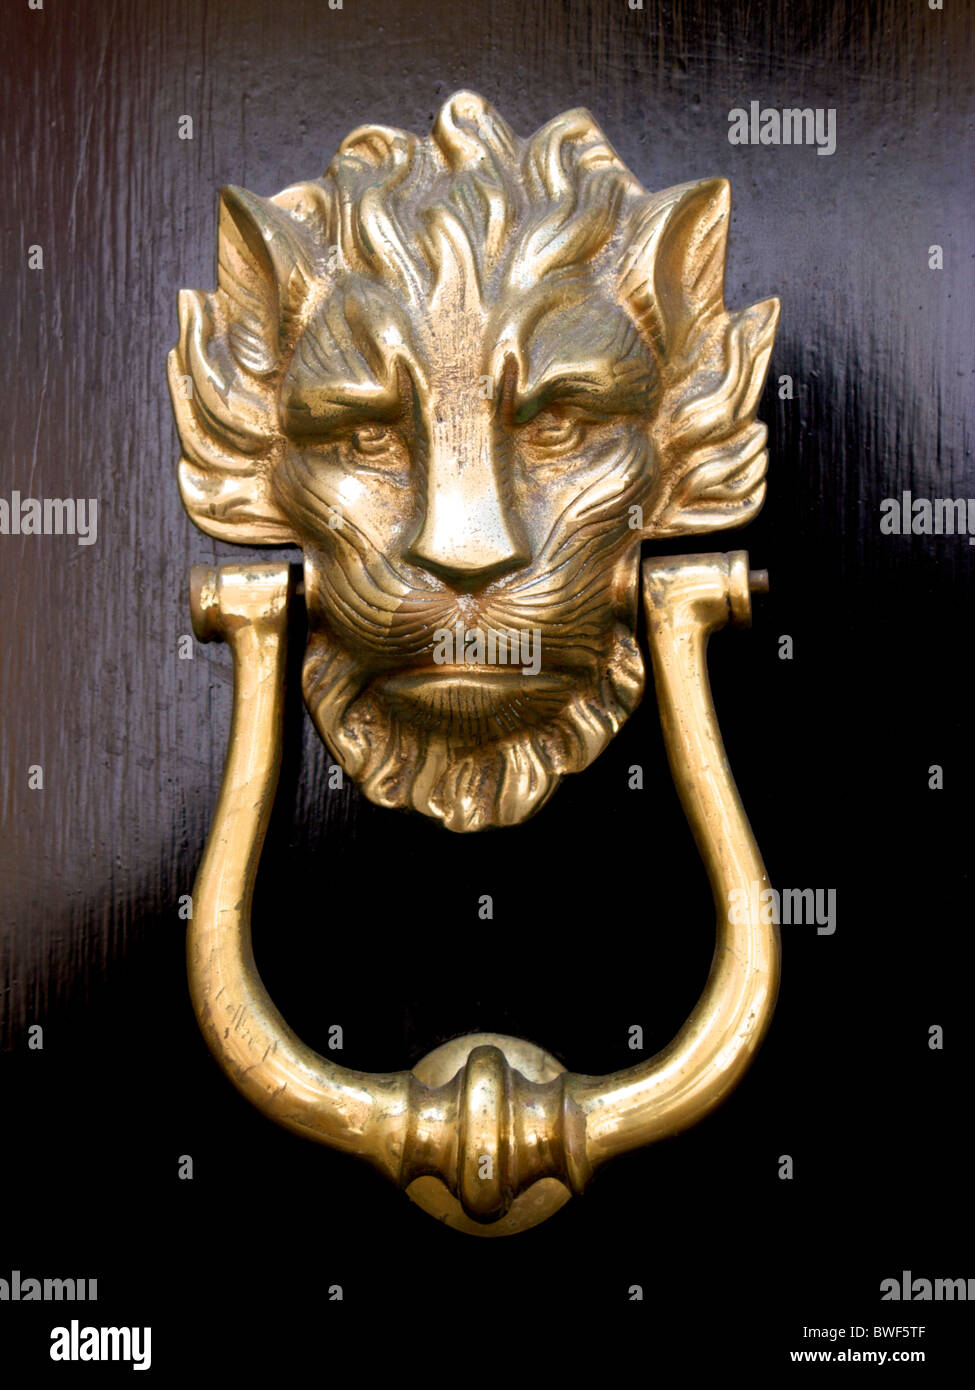 A brass door knocker in the shape of a lion's head on a black wooden door Stock Photo